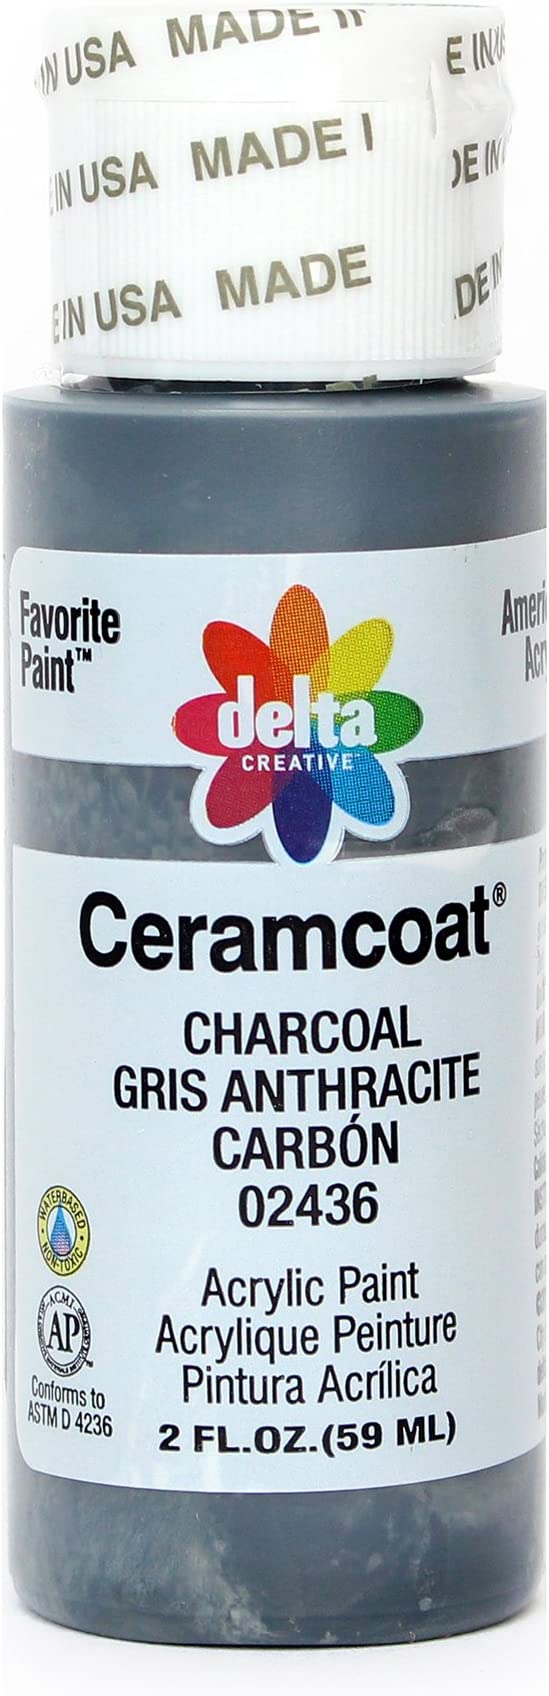 CERAMCOAT Acrylic Paint 59ml 2floz  - CHARCOAL